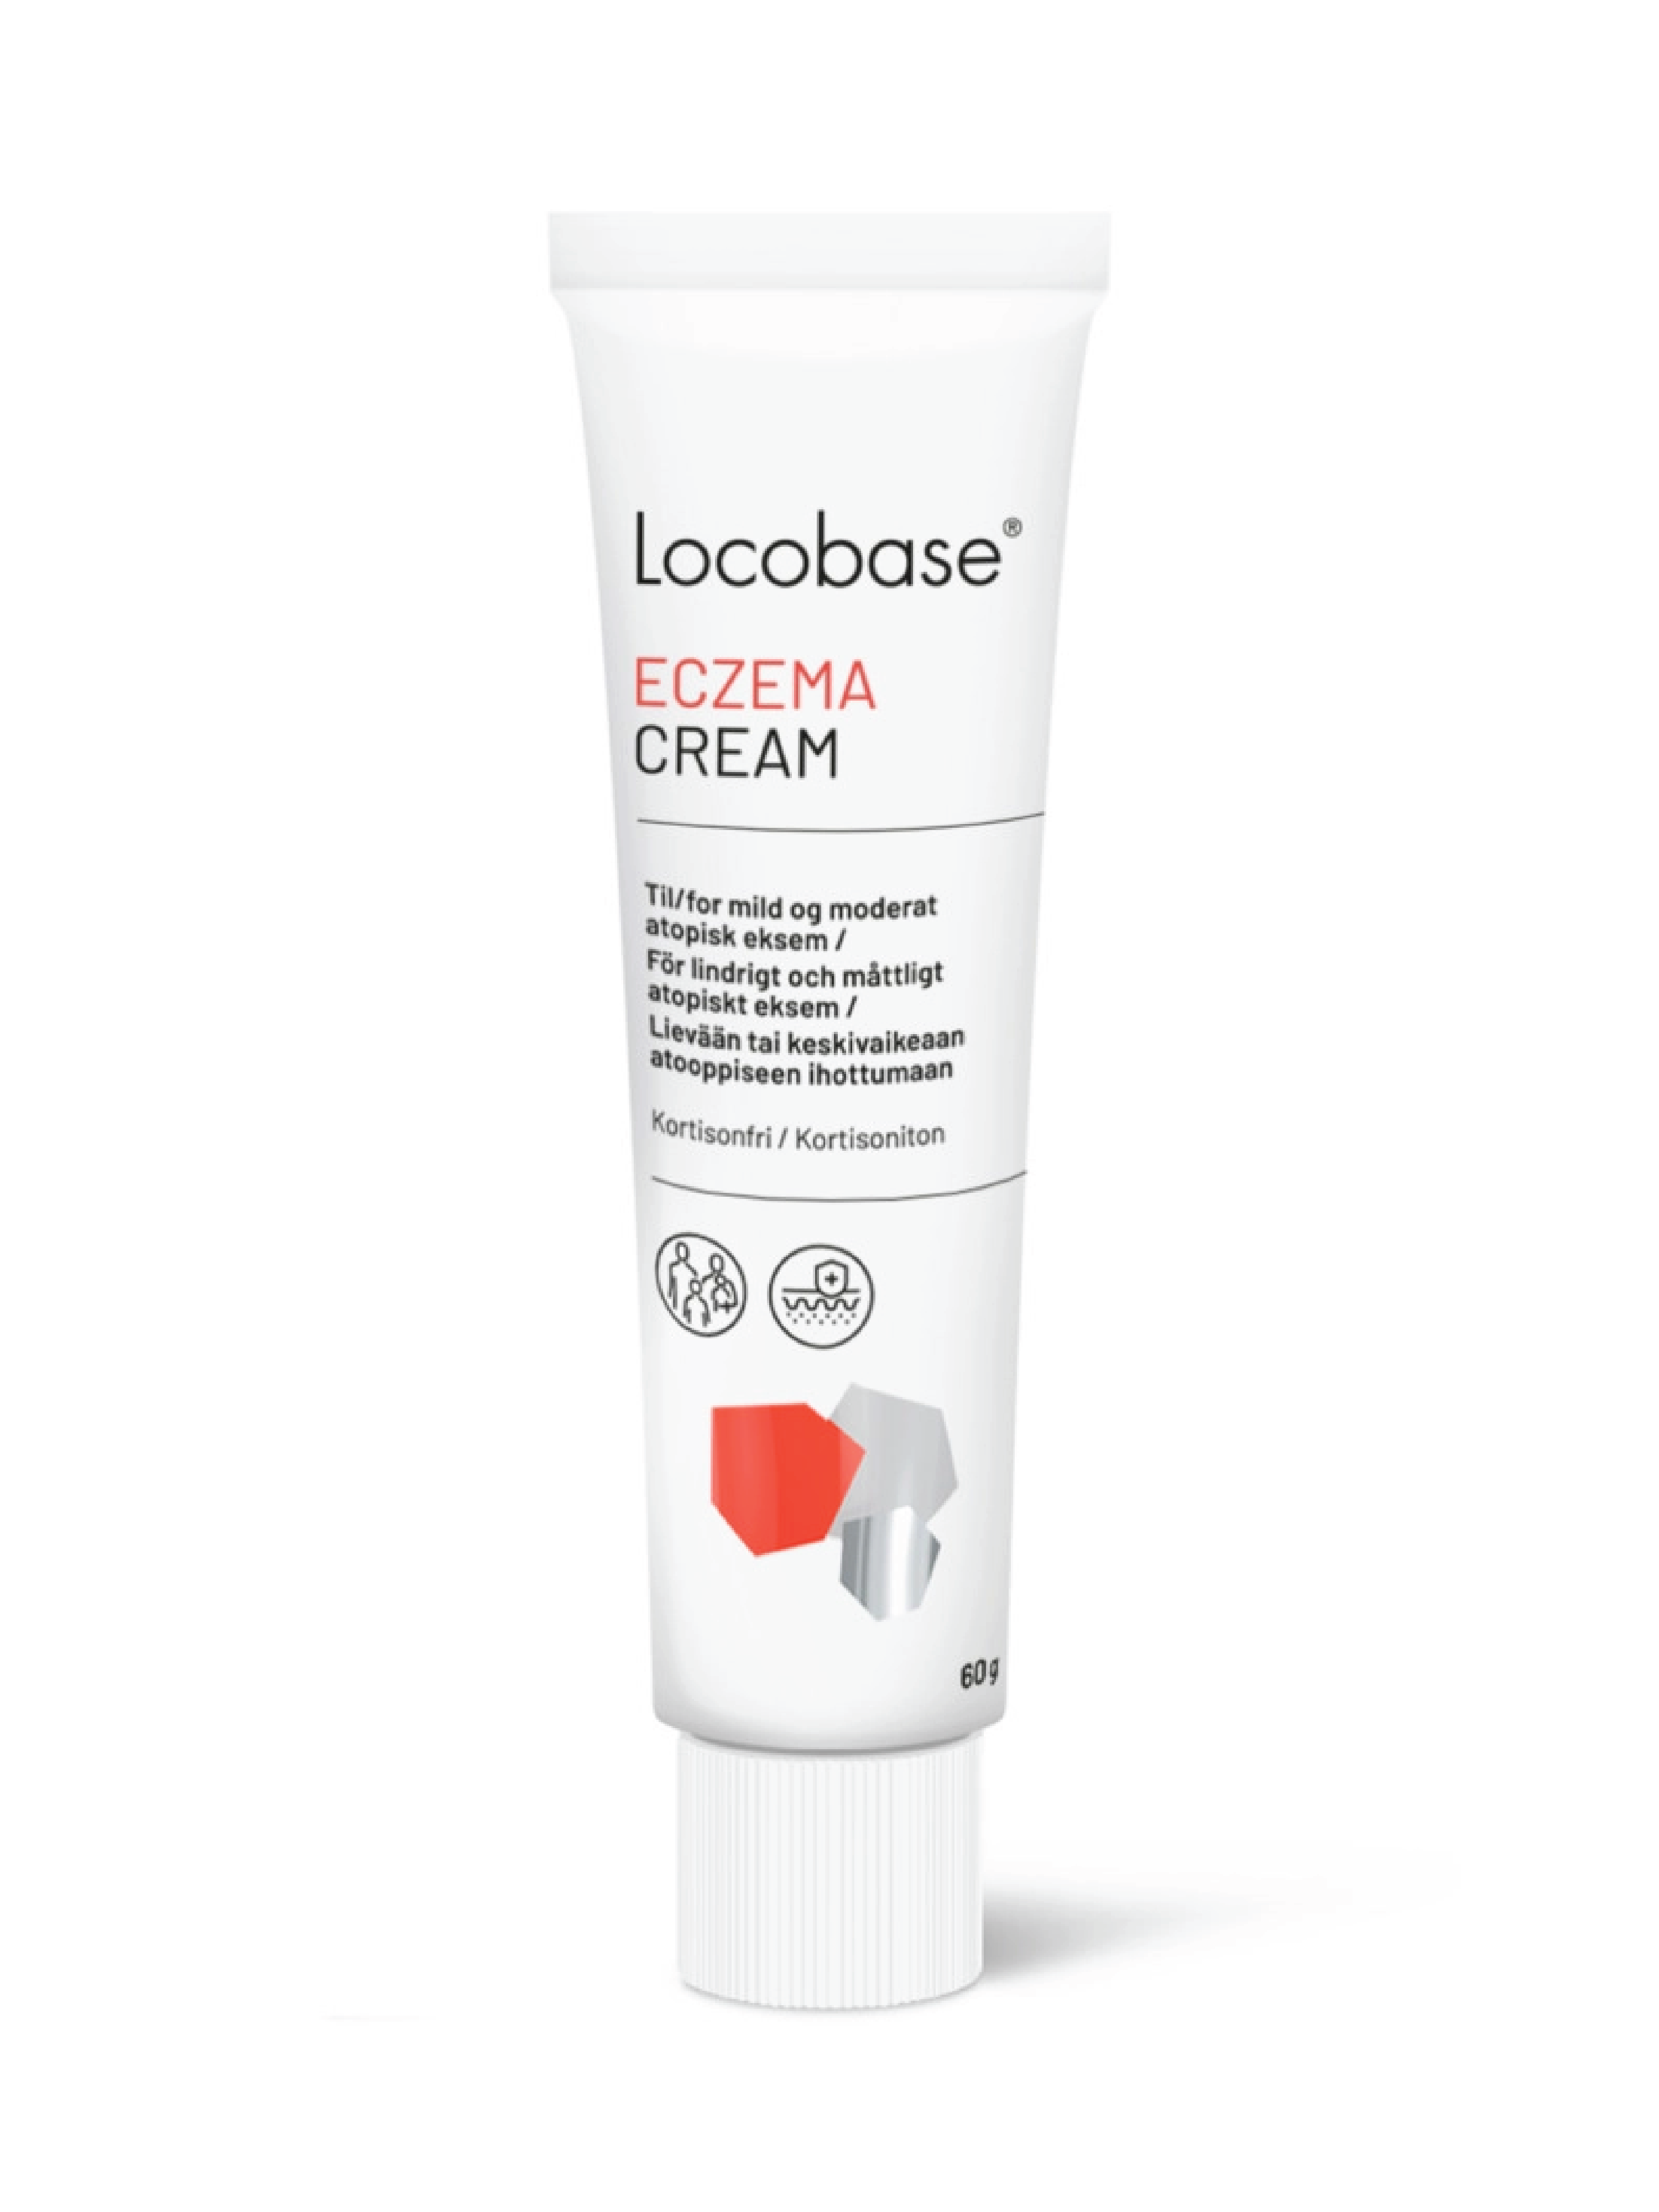 Locobase Eczema Cream, 60 g